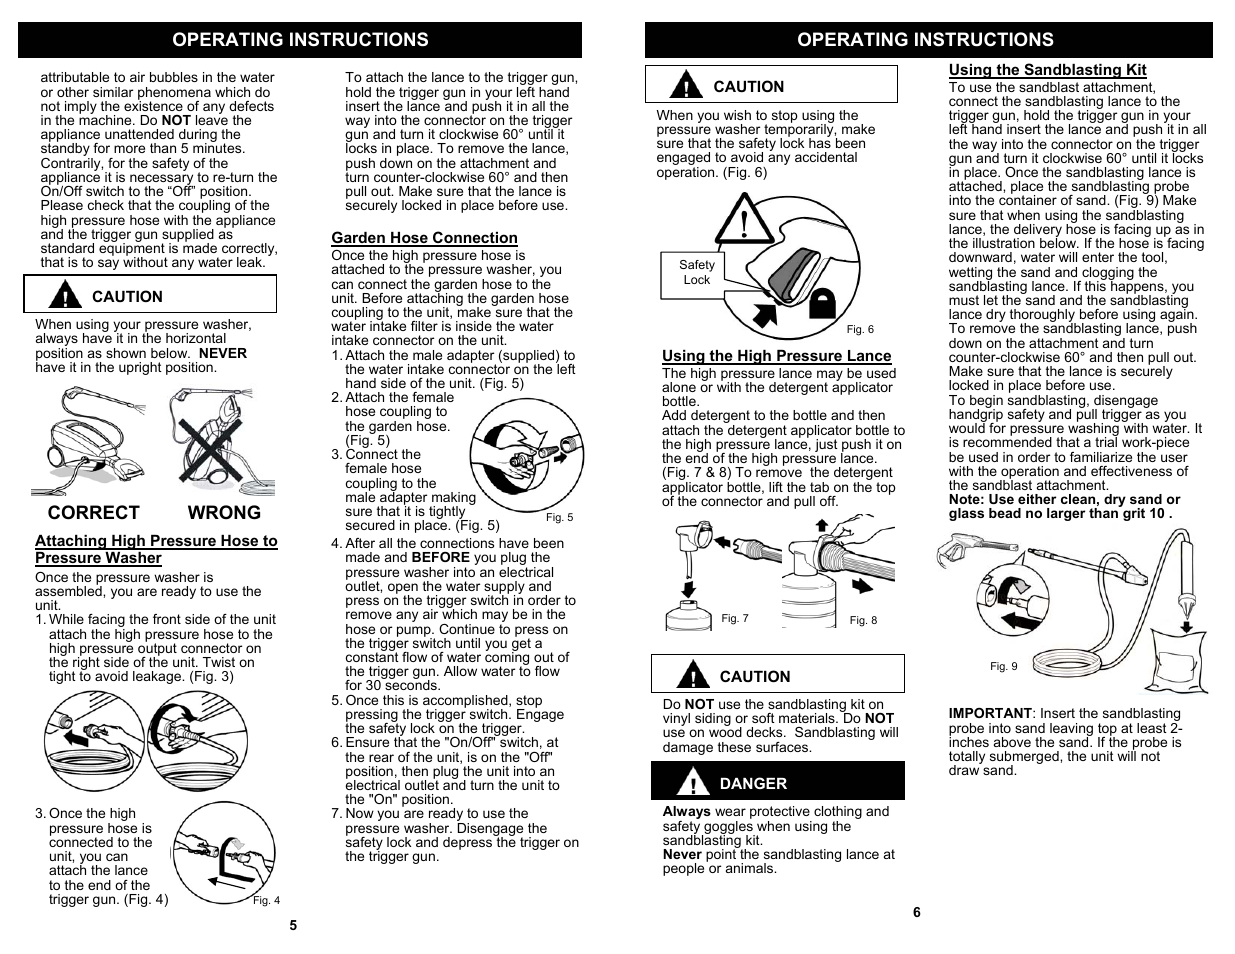 Operating instructions, Correct wrong | Fantom Vacuum FANTOM VPW40H User Manual | Page 6 / 6